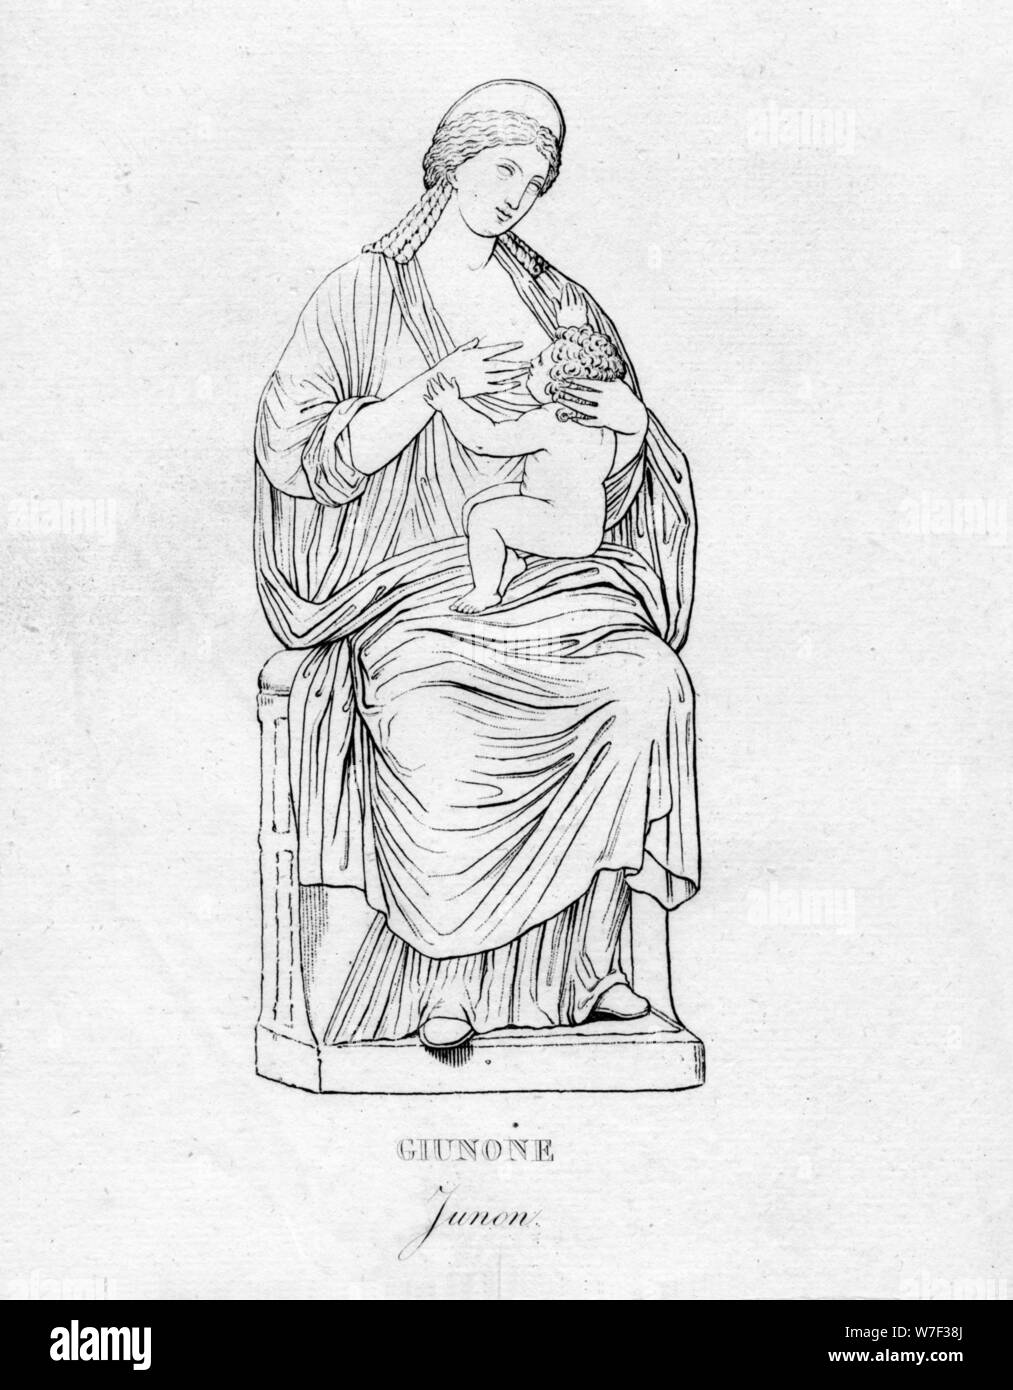 'Giunone (Junon)', c1850. Artist: Unknown. Stock Photo